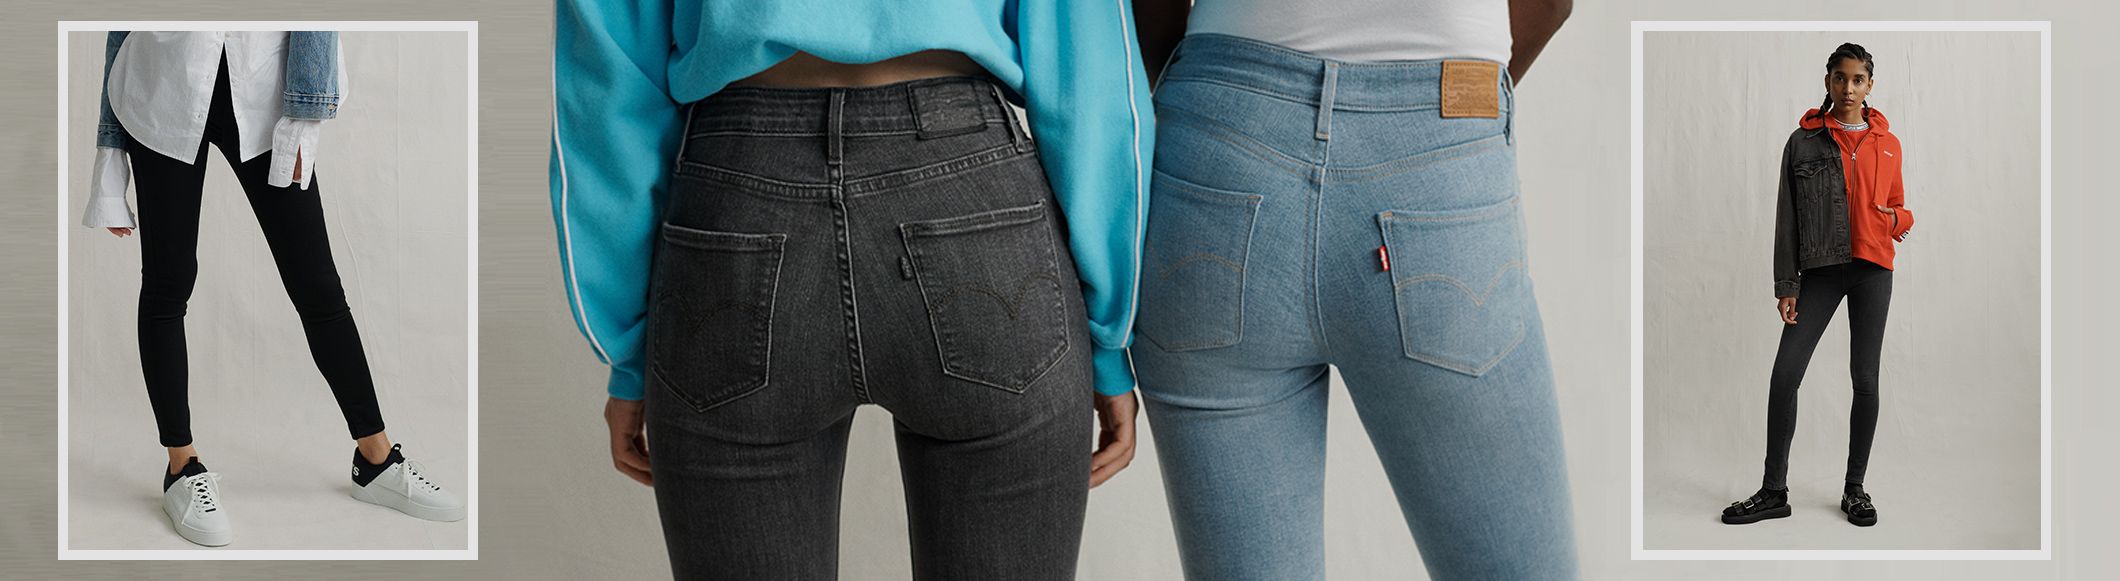 levi's women's plus size 310 shaping super skinny jeans